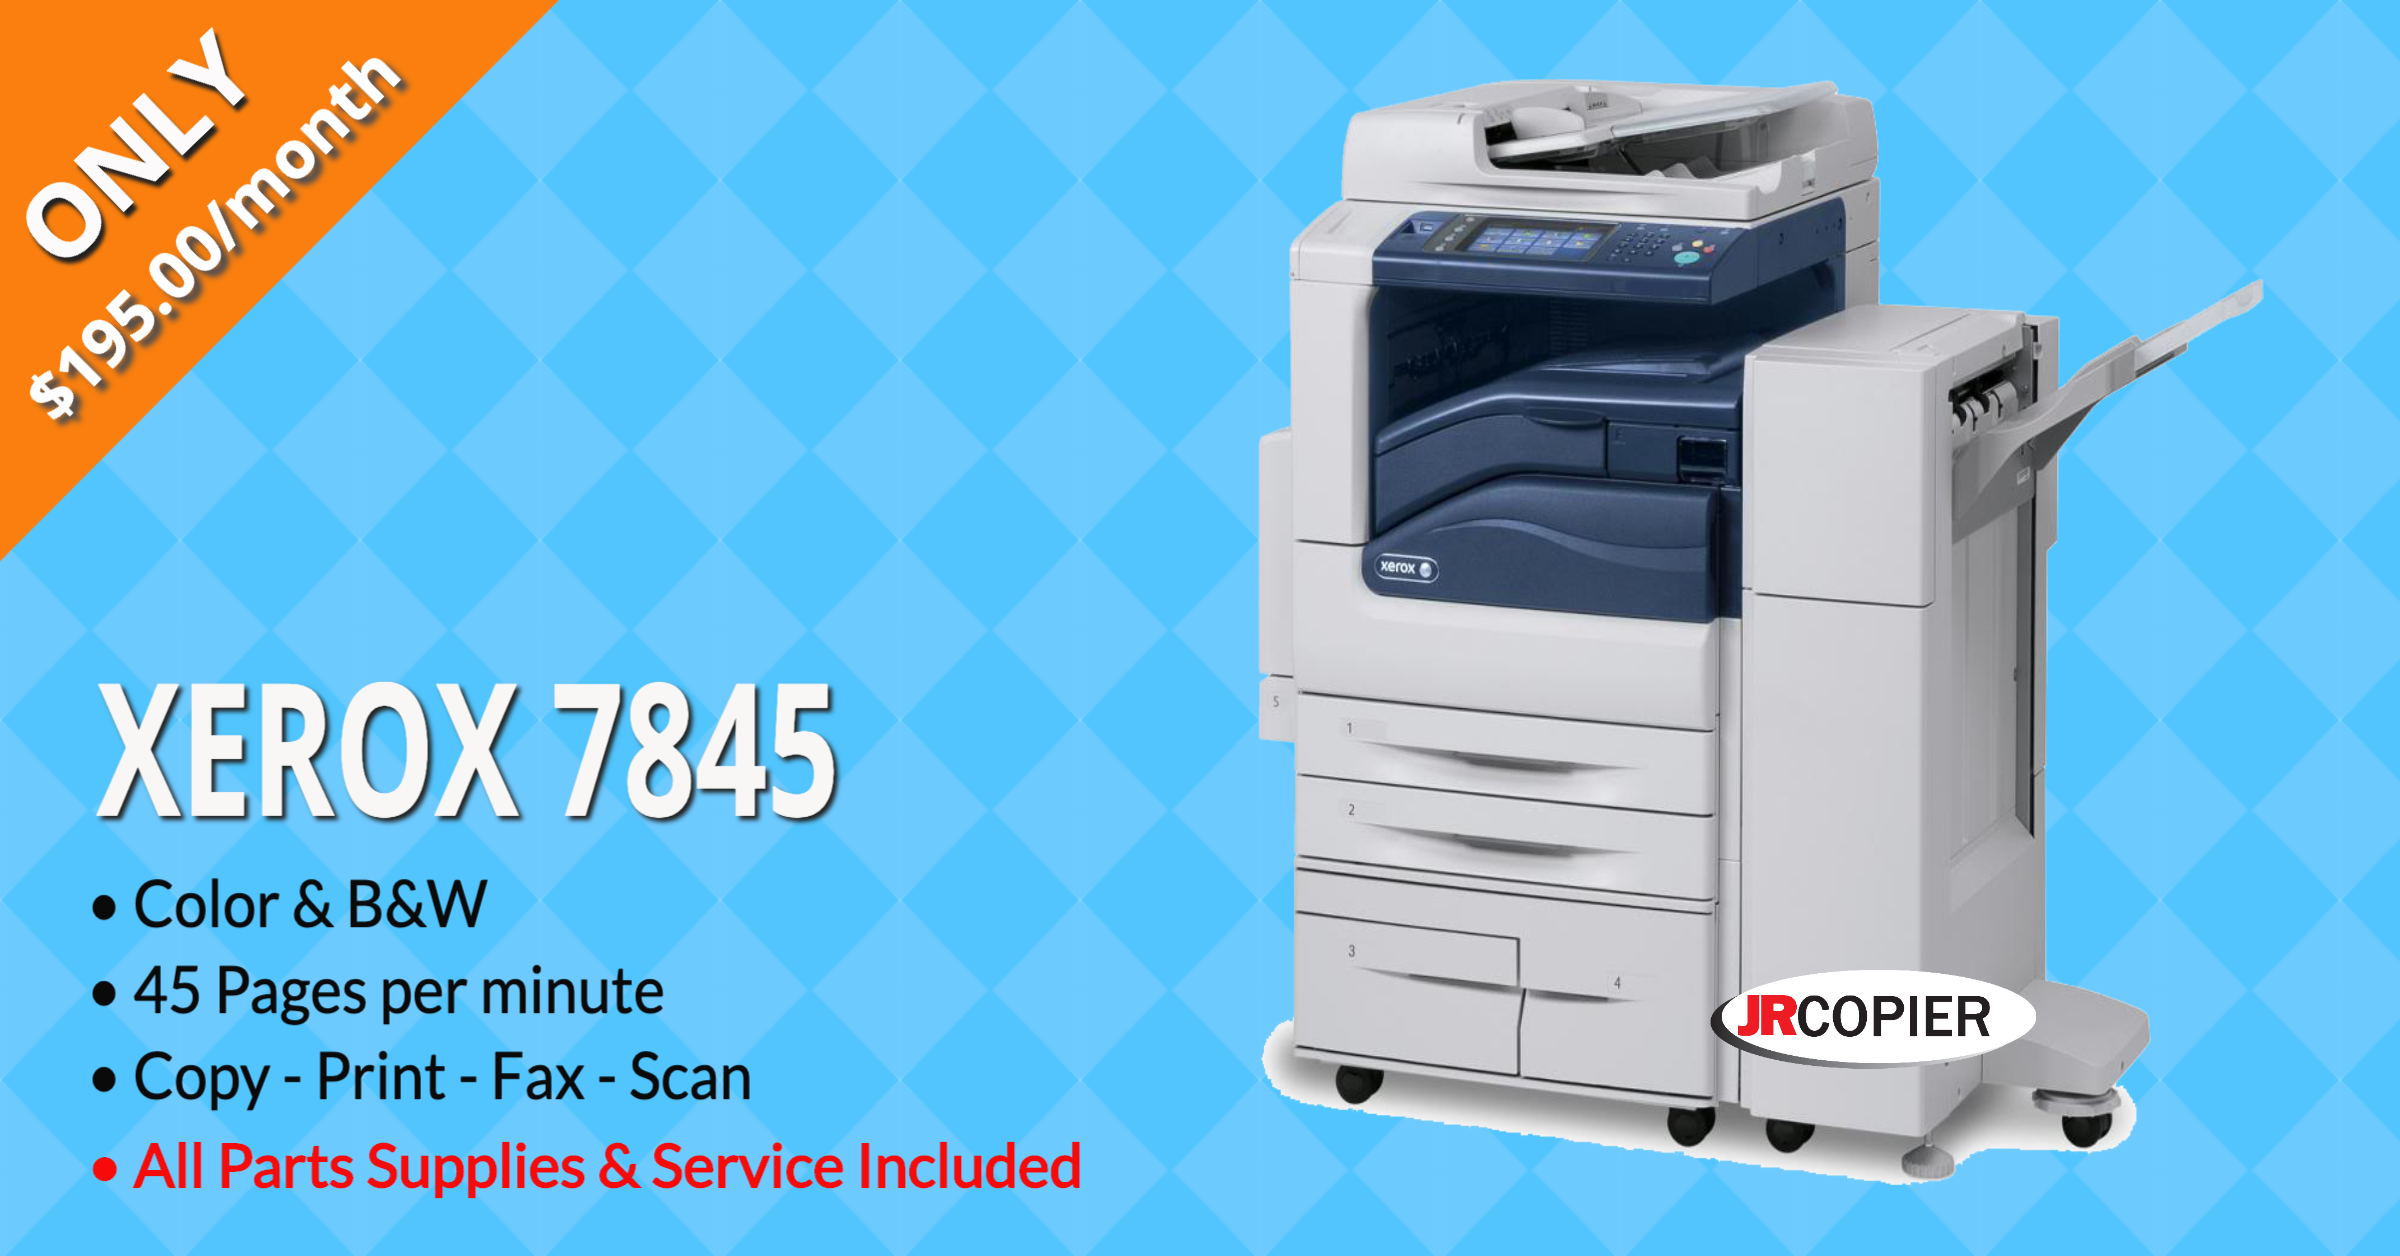 Multifunction Printer Sales 43123, 43137, 43146